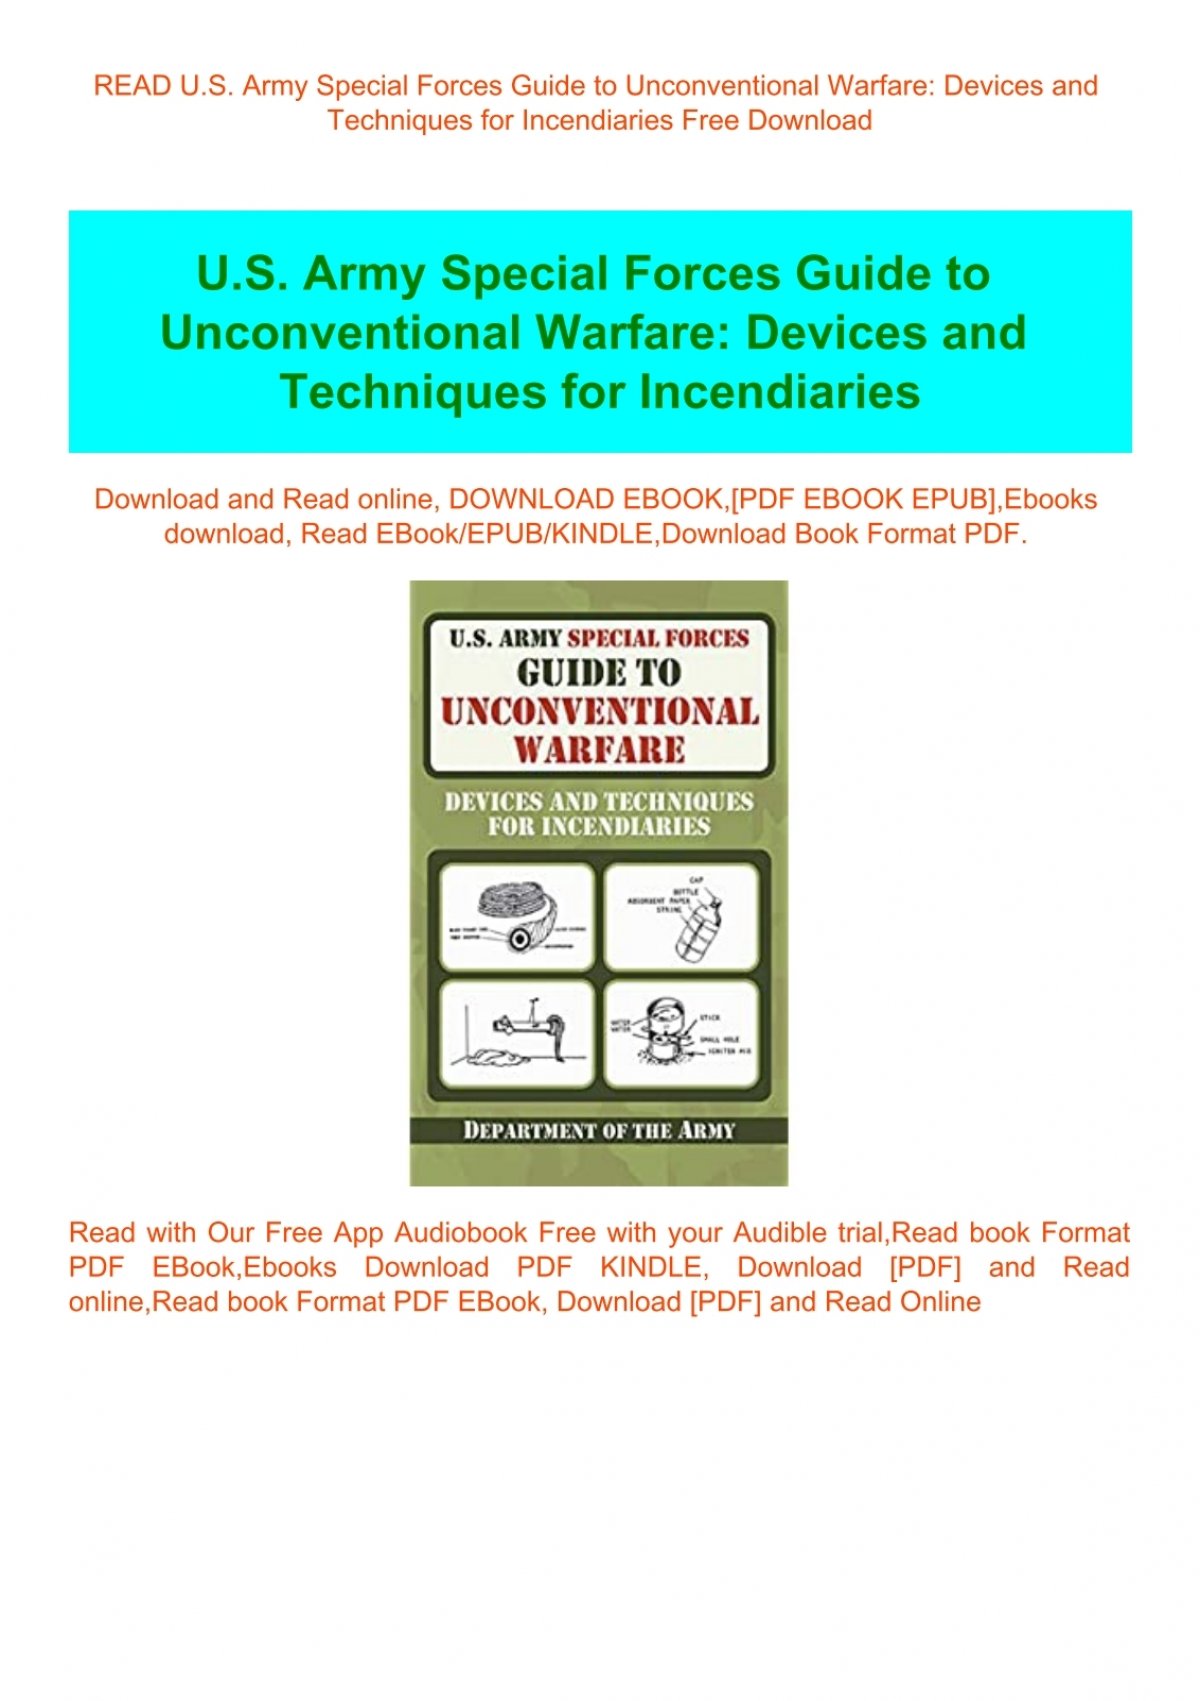 Advanced warfare free download